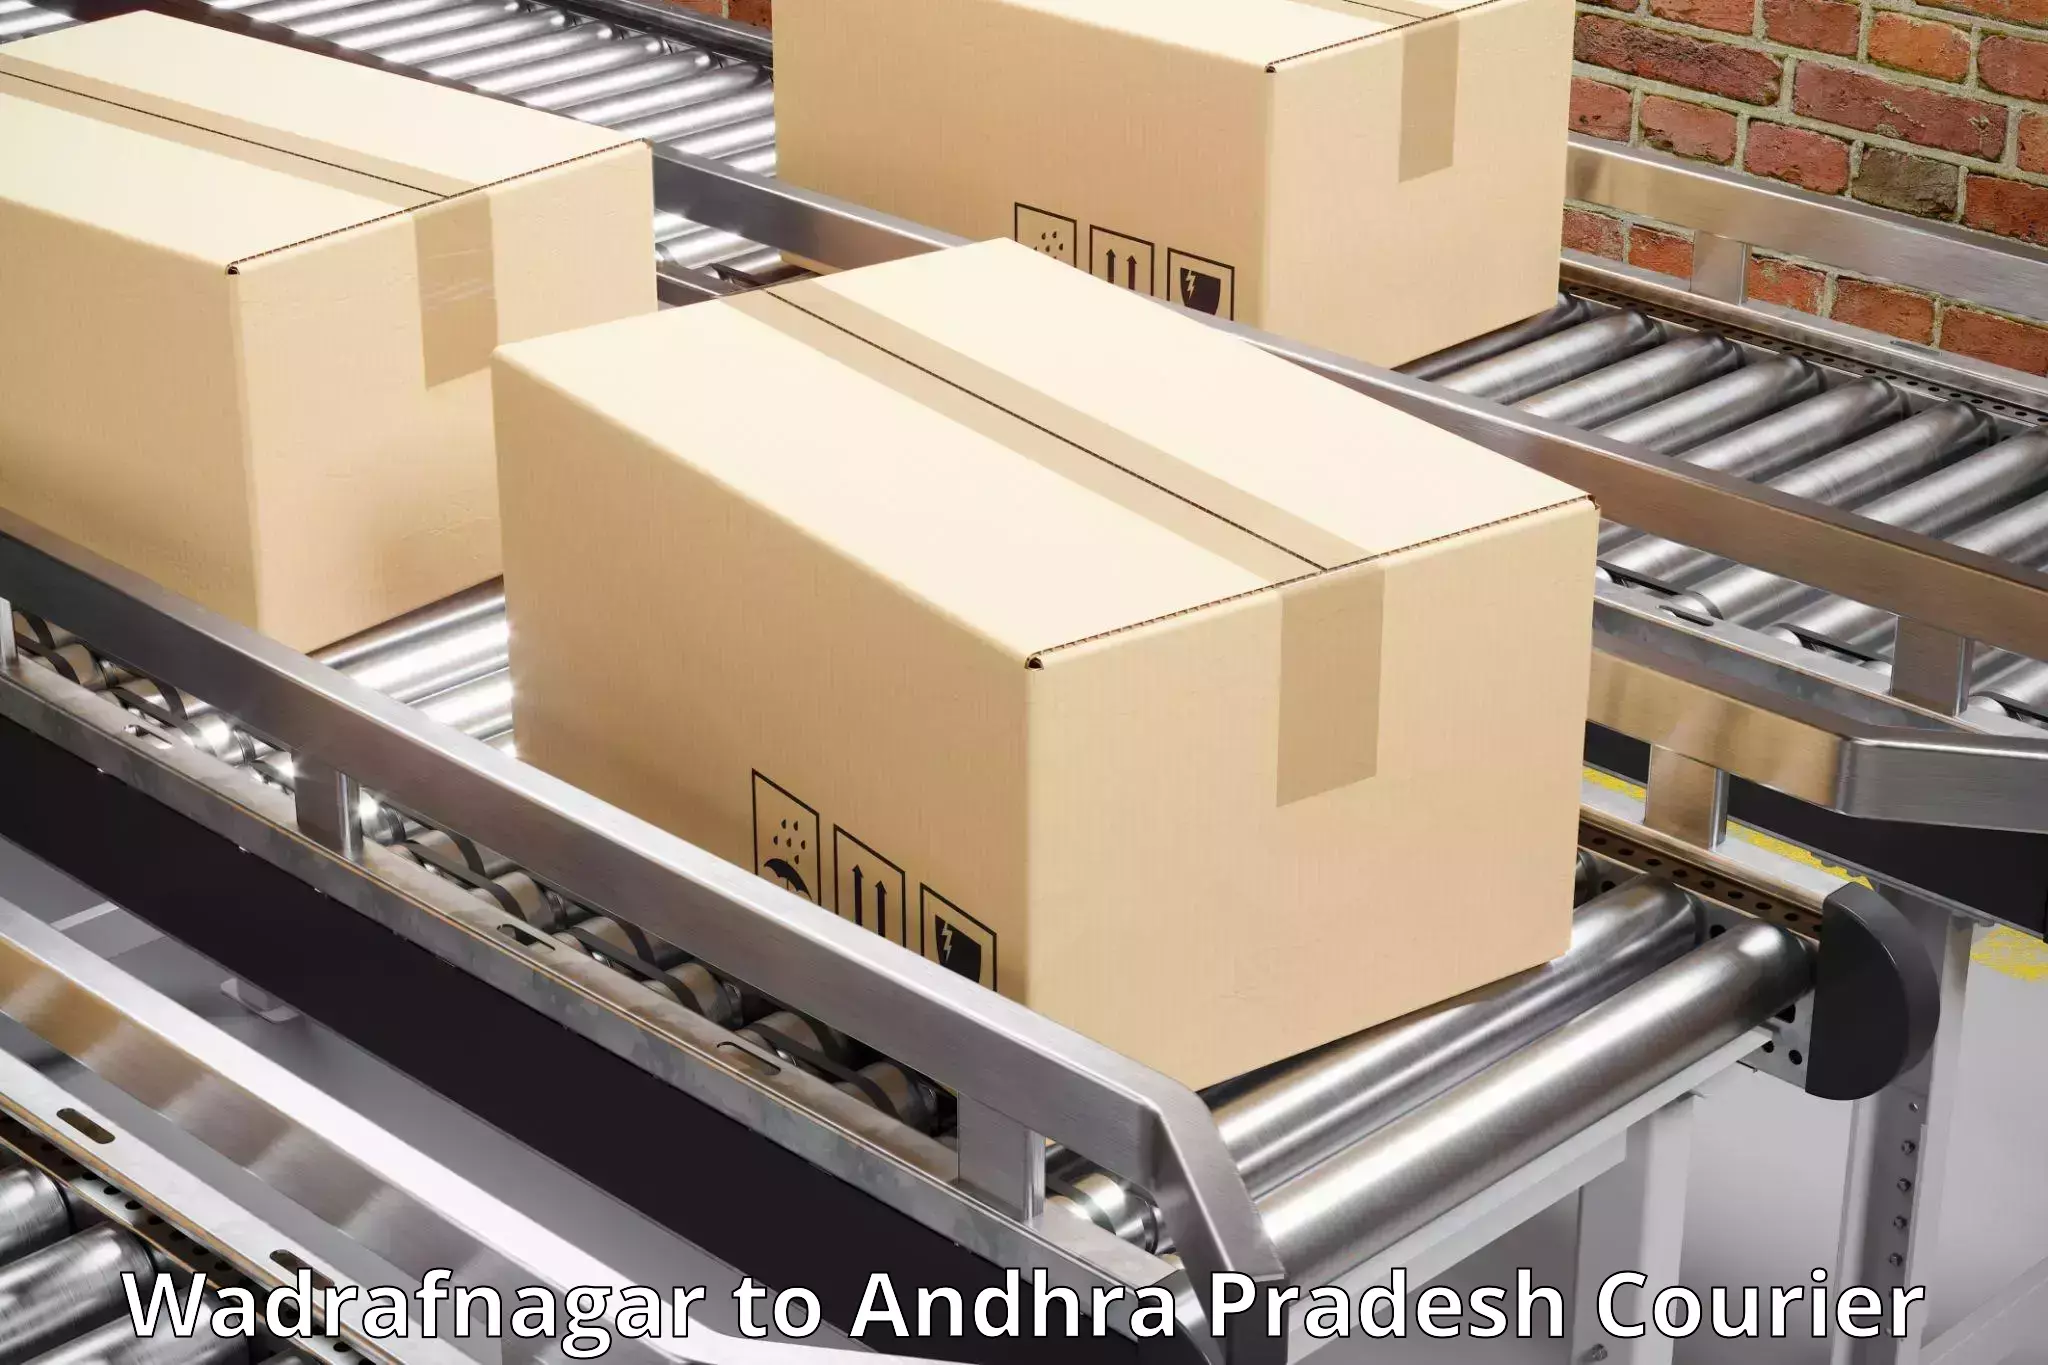 Same-day delivery solutions Wadrafnagar to Andhra Pradesh